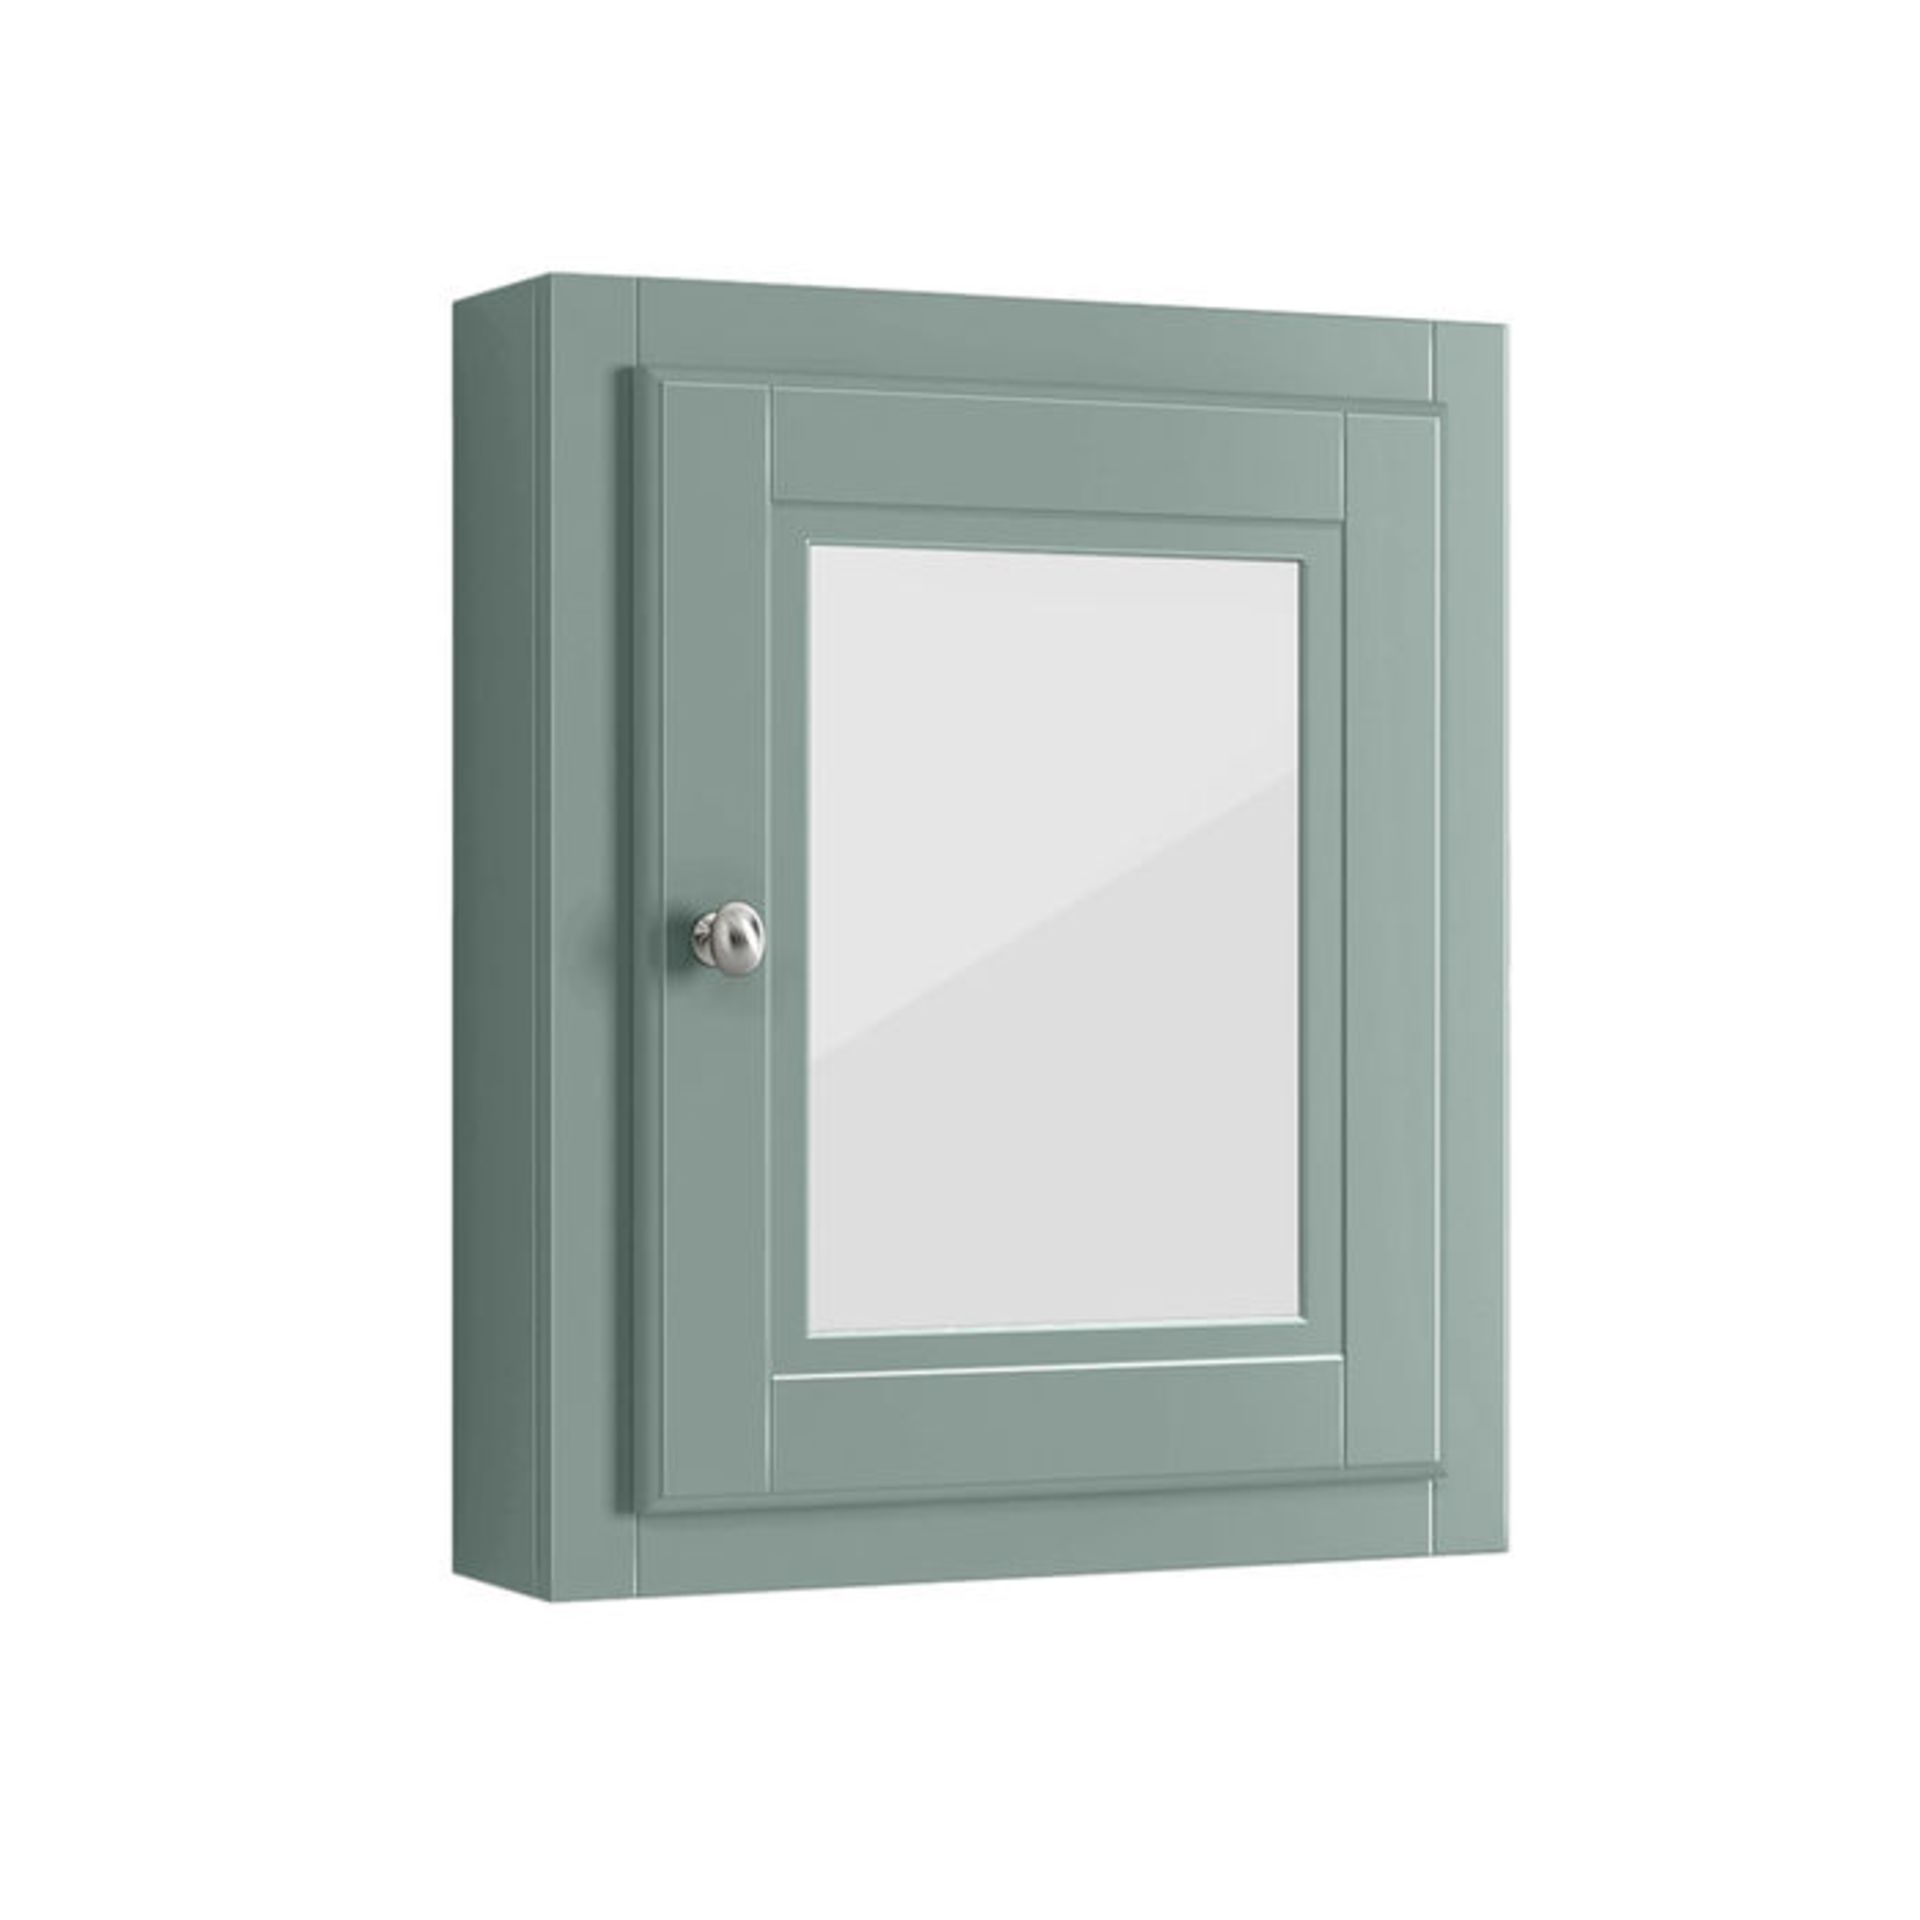 (CS208) Cambridge Single Door Mirror Cabinet - Marine Mist. RRP £199.99. Traditional aesthetic - Image 3 of 4